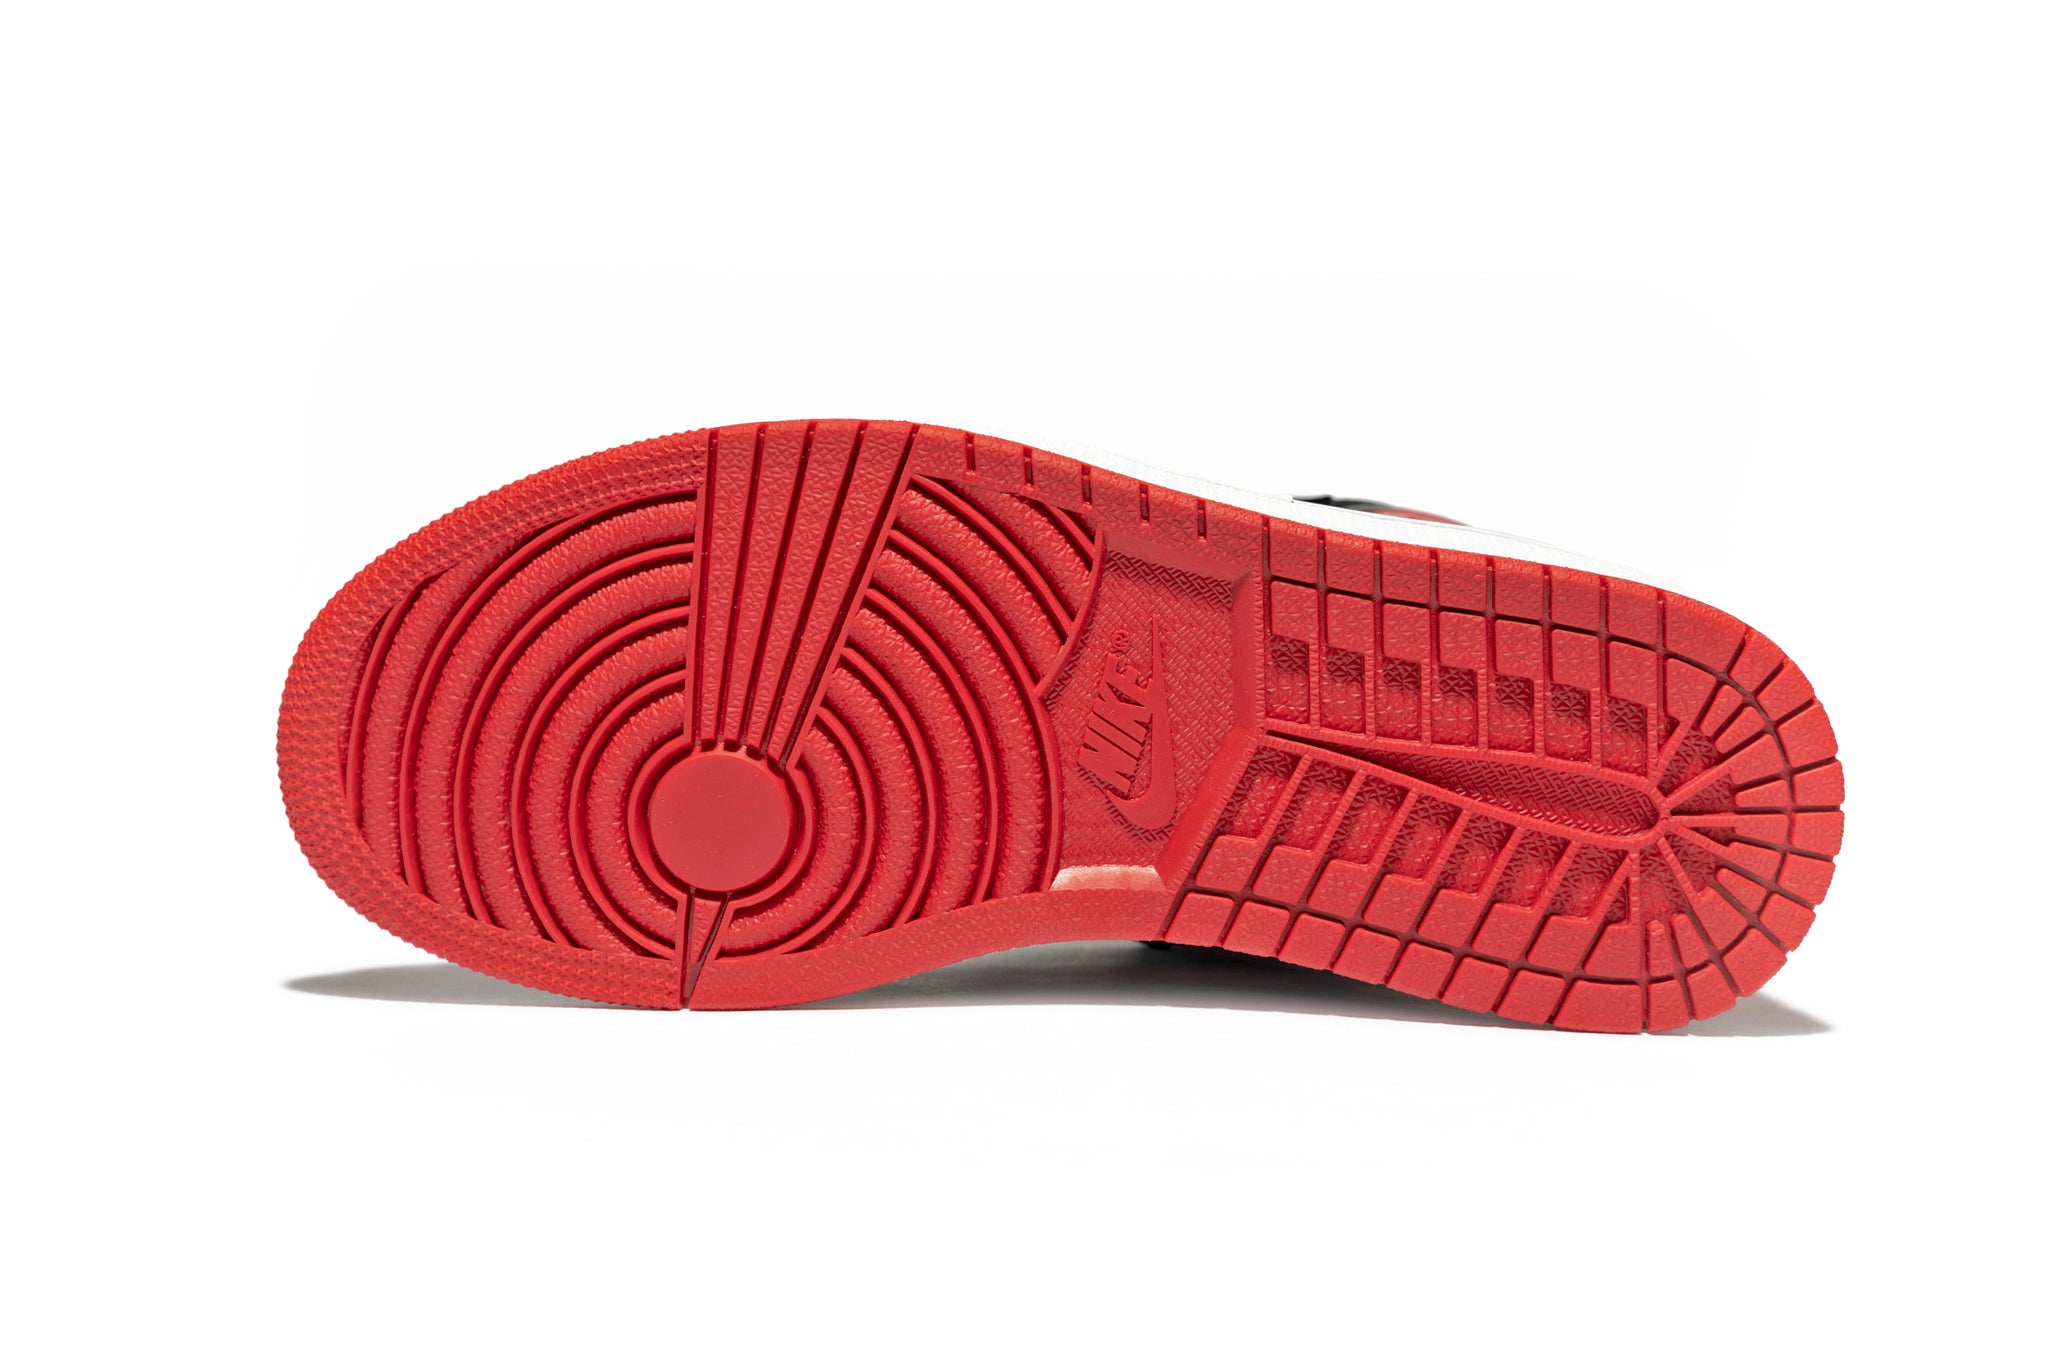 Nike Jordan 1 - Retro High Patent Bred